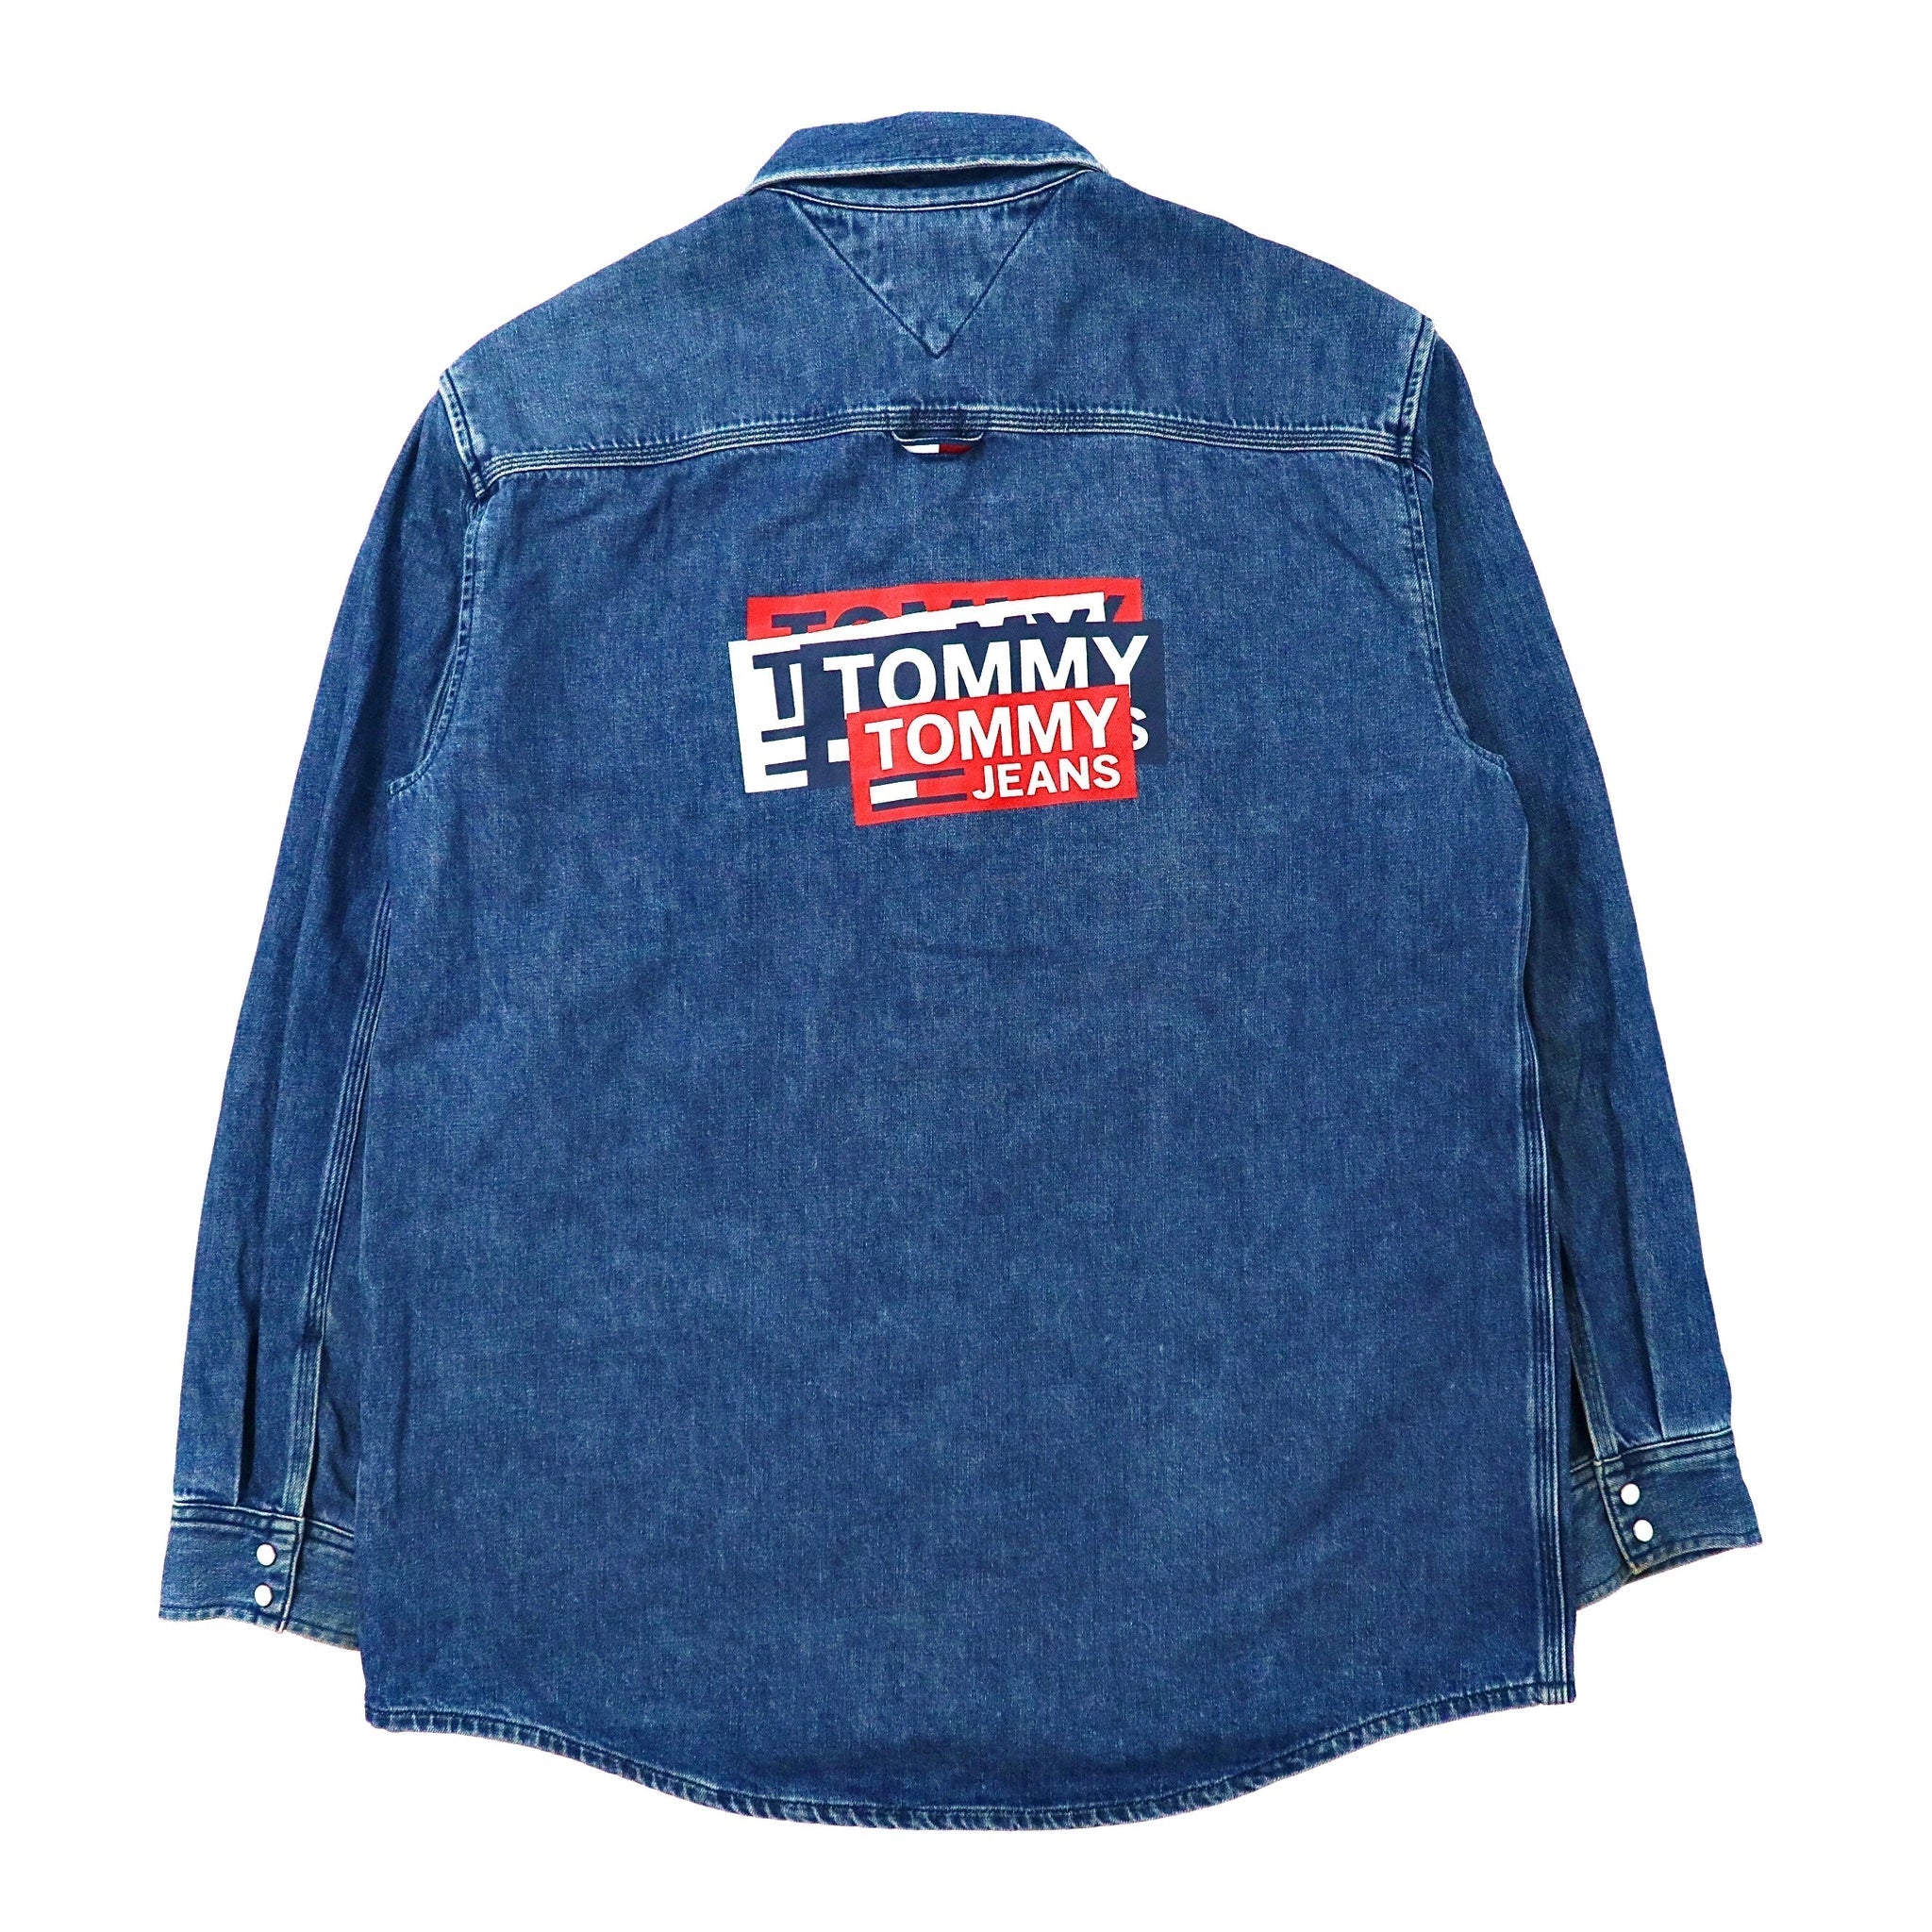 TOMMY JEANS バックグラフィック デニムシャツ L ブルー スナップボタン DM0DM06735